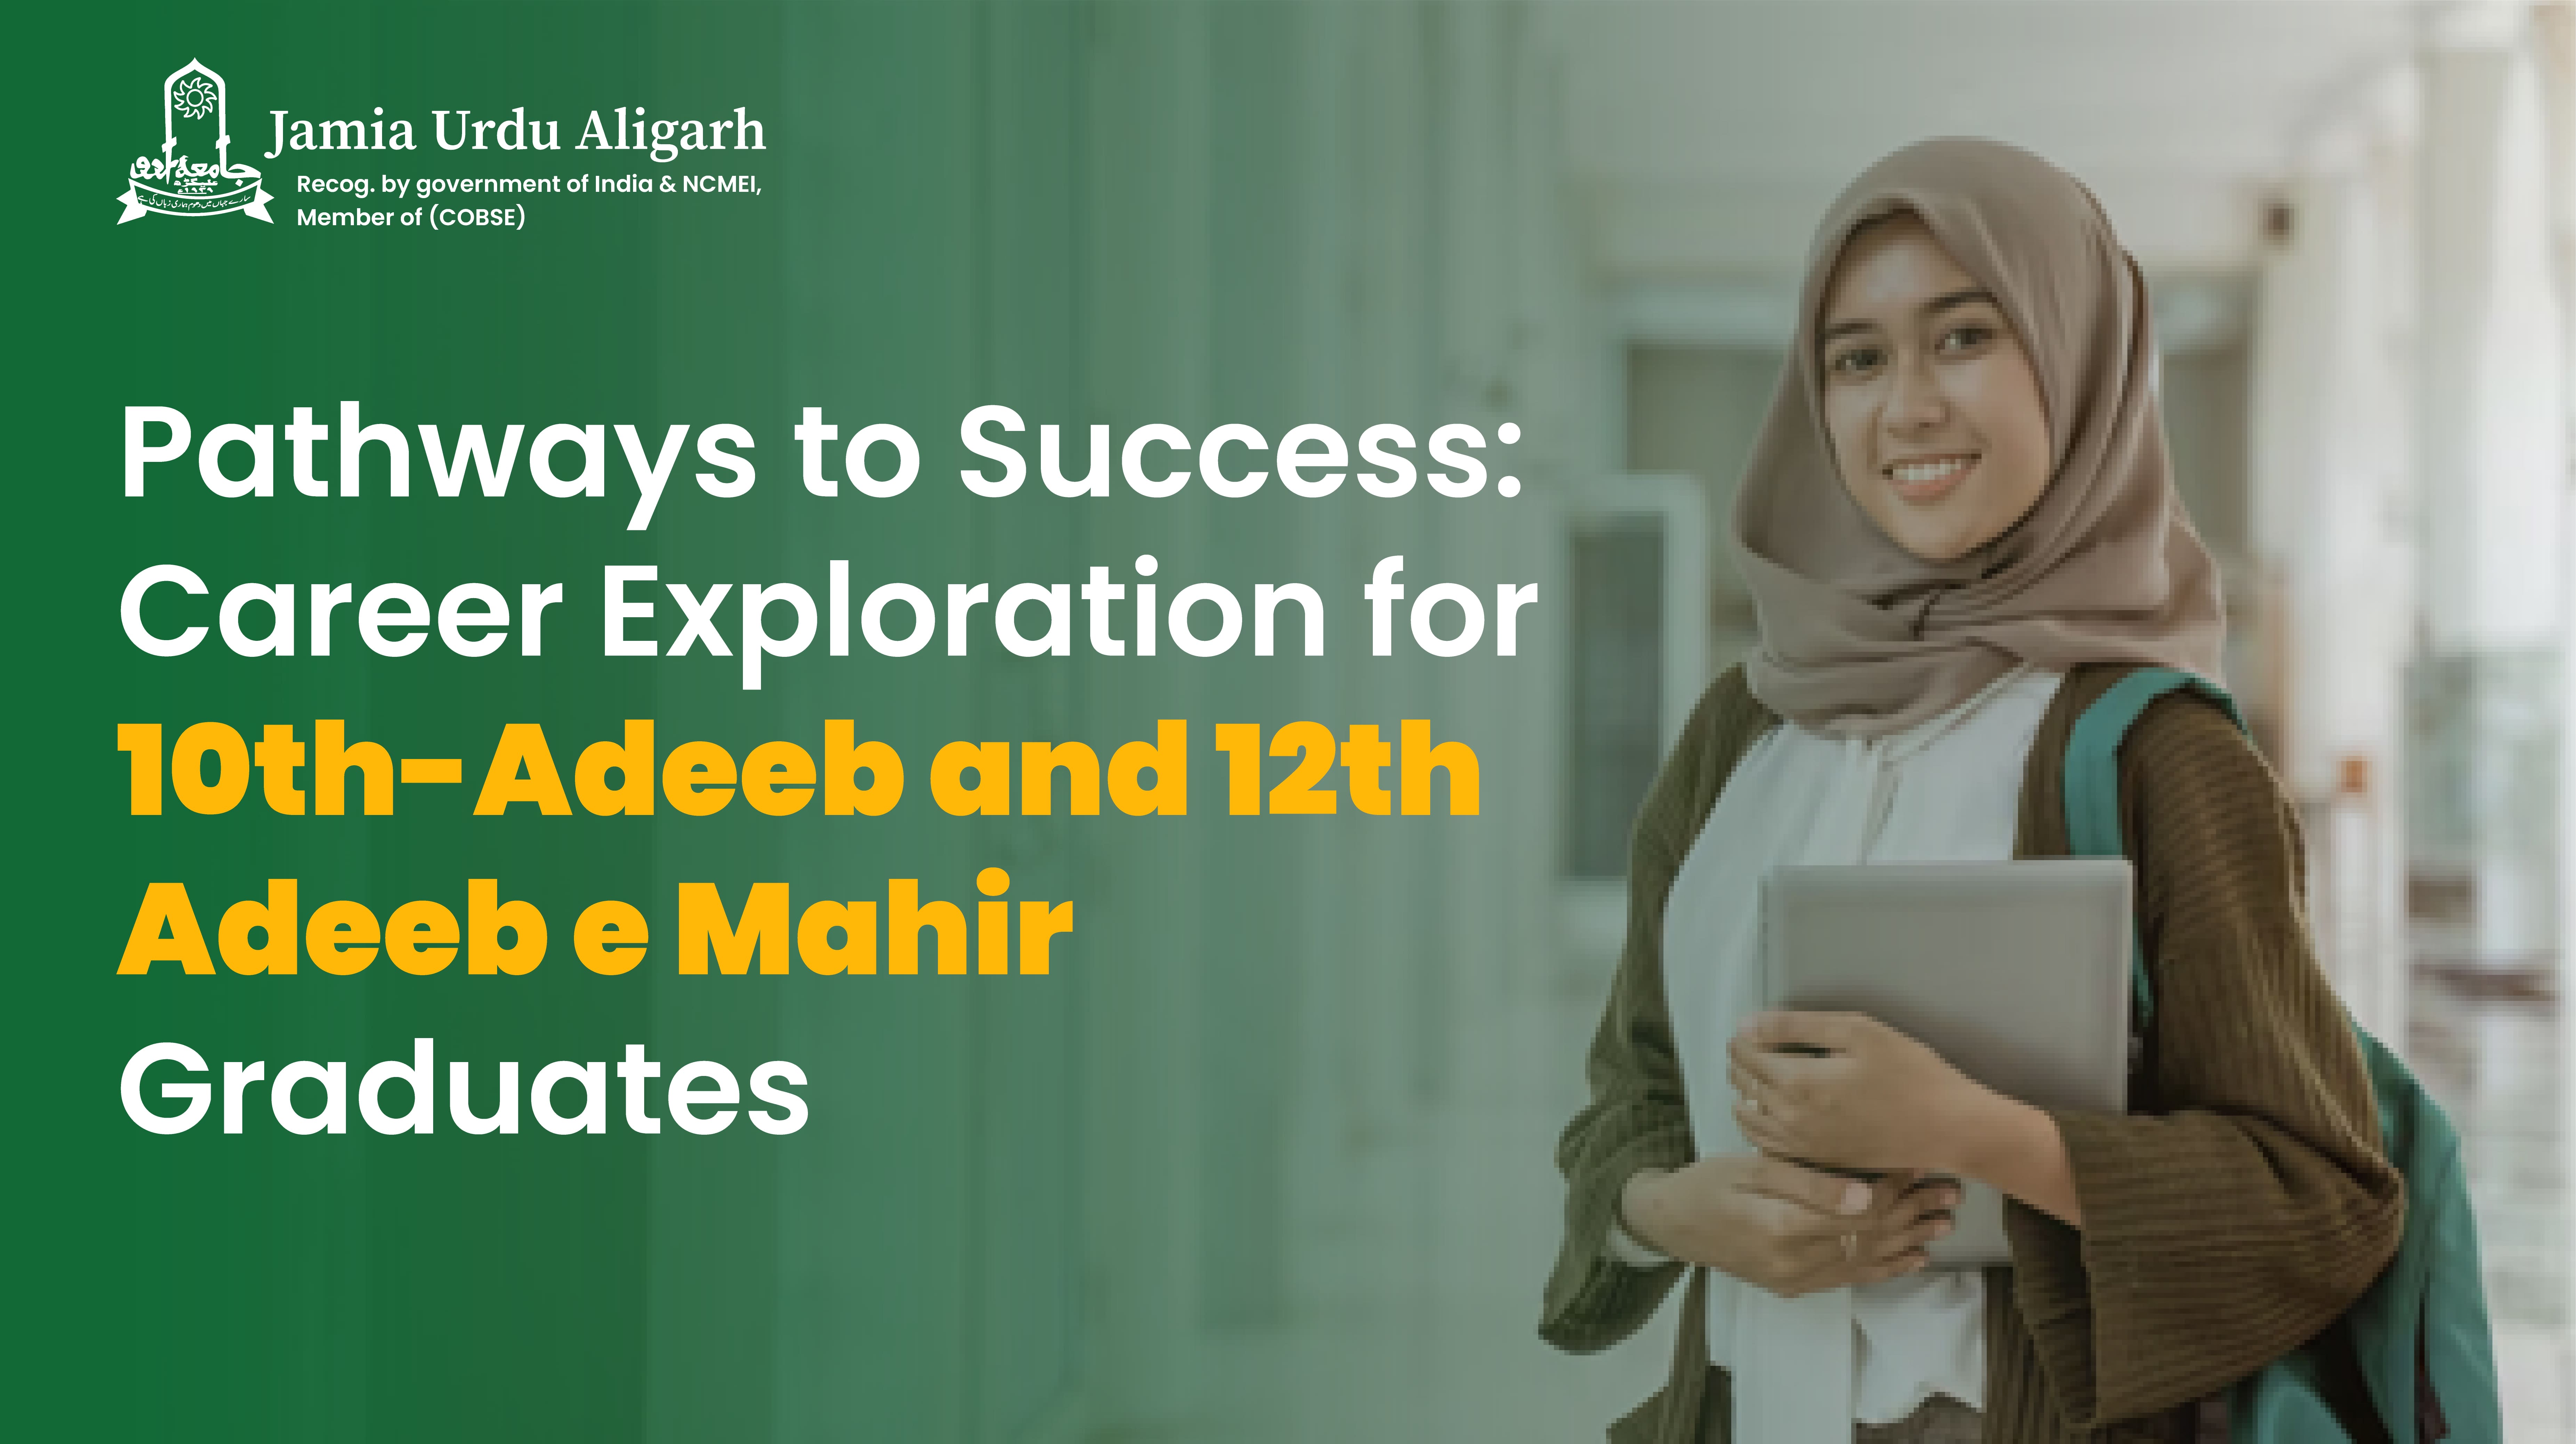 Pathways to Success: Career Exploration for 10th-Adeeb and 12th Adeeb e Mahir Graduates